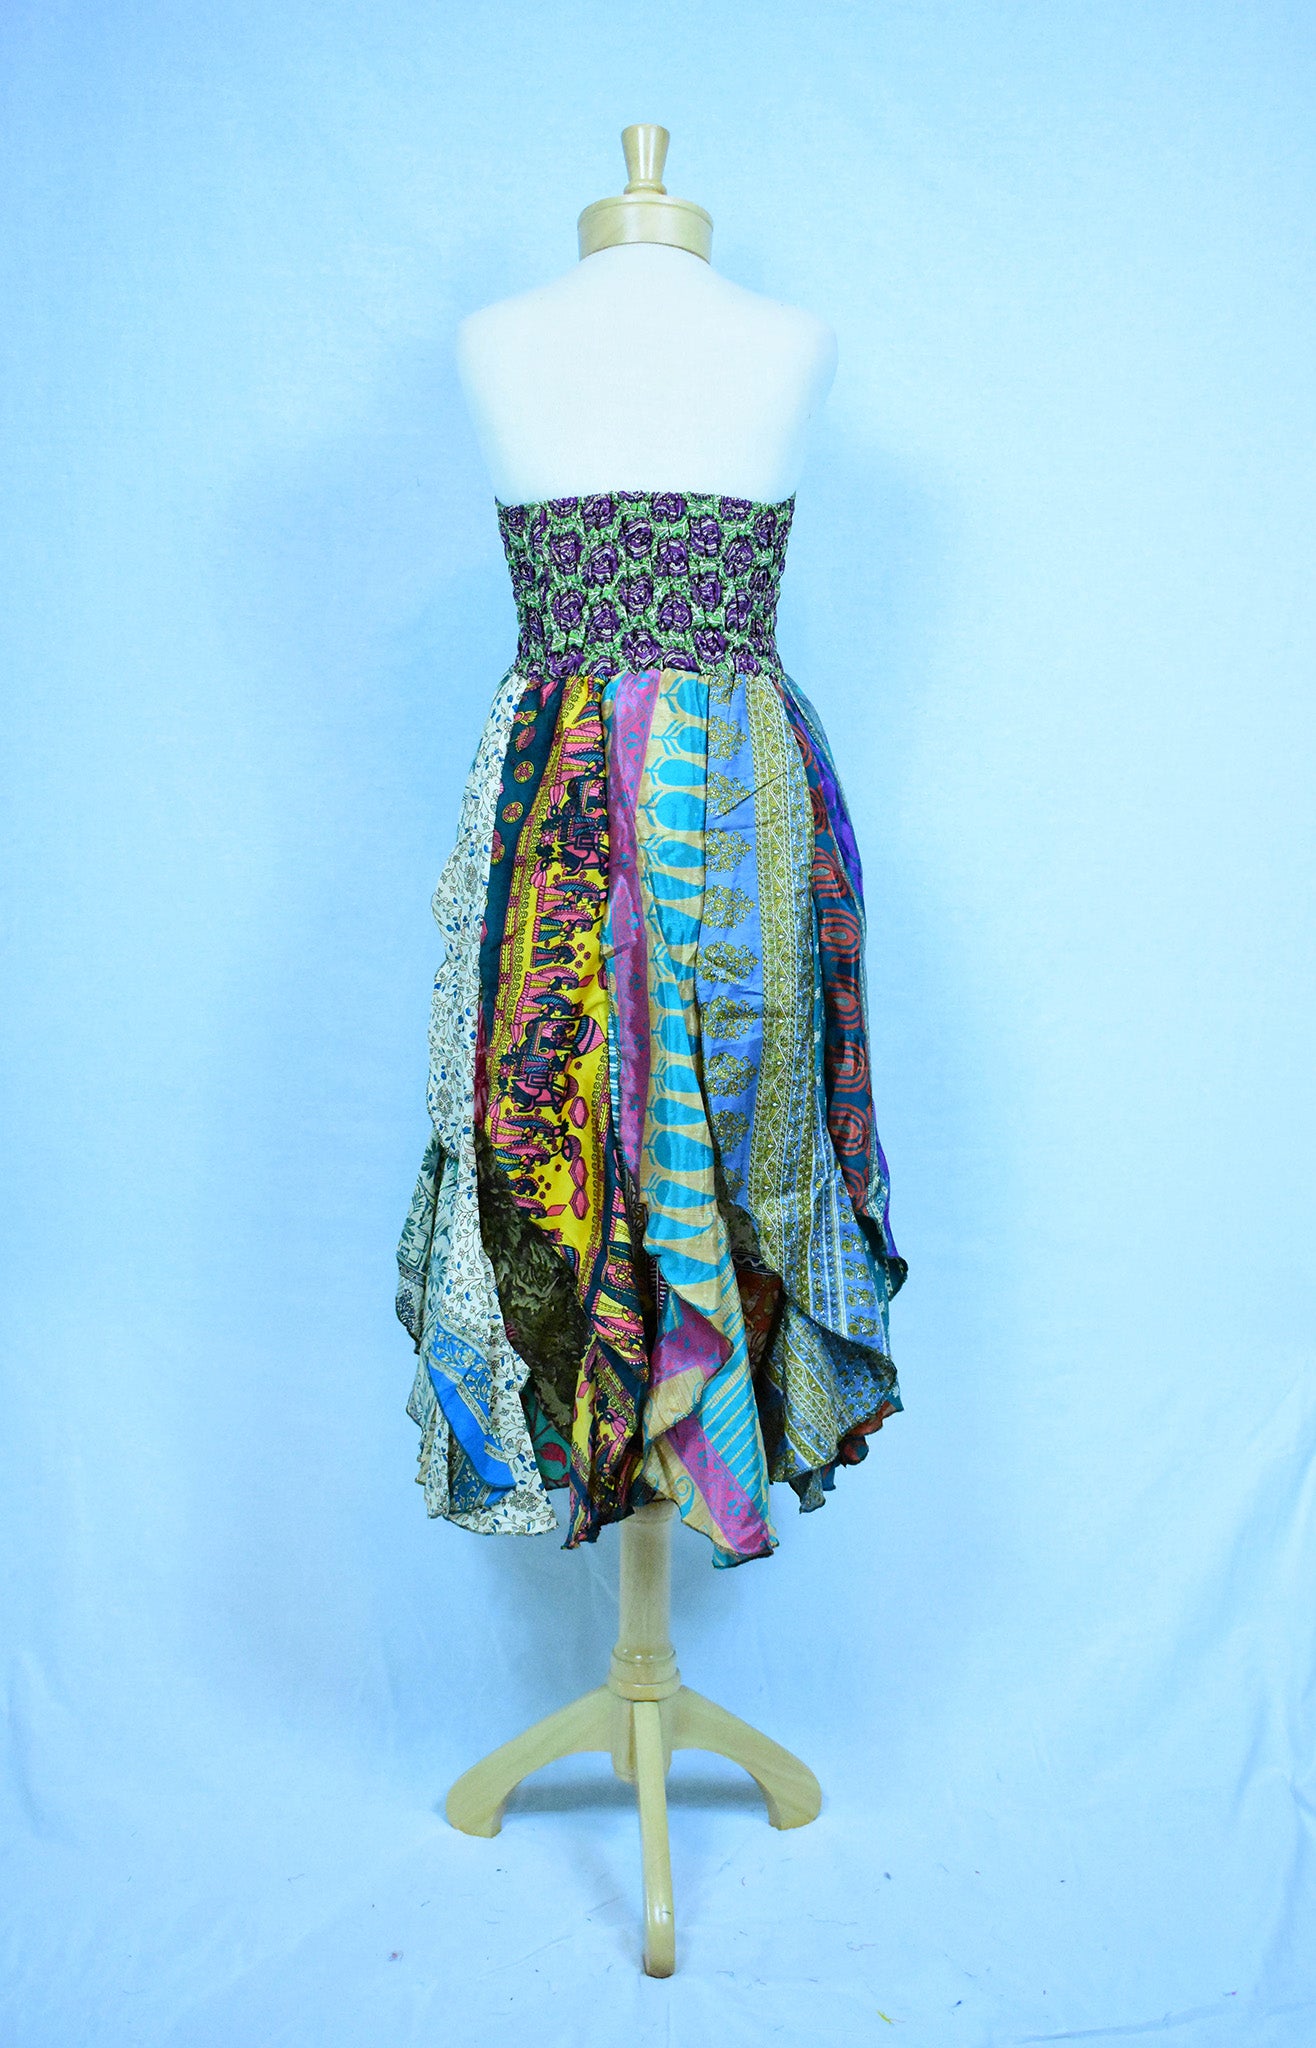 Fairy Dress Ruffle Skirt 9 Back View